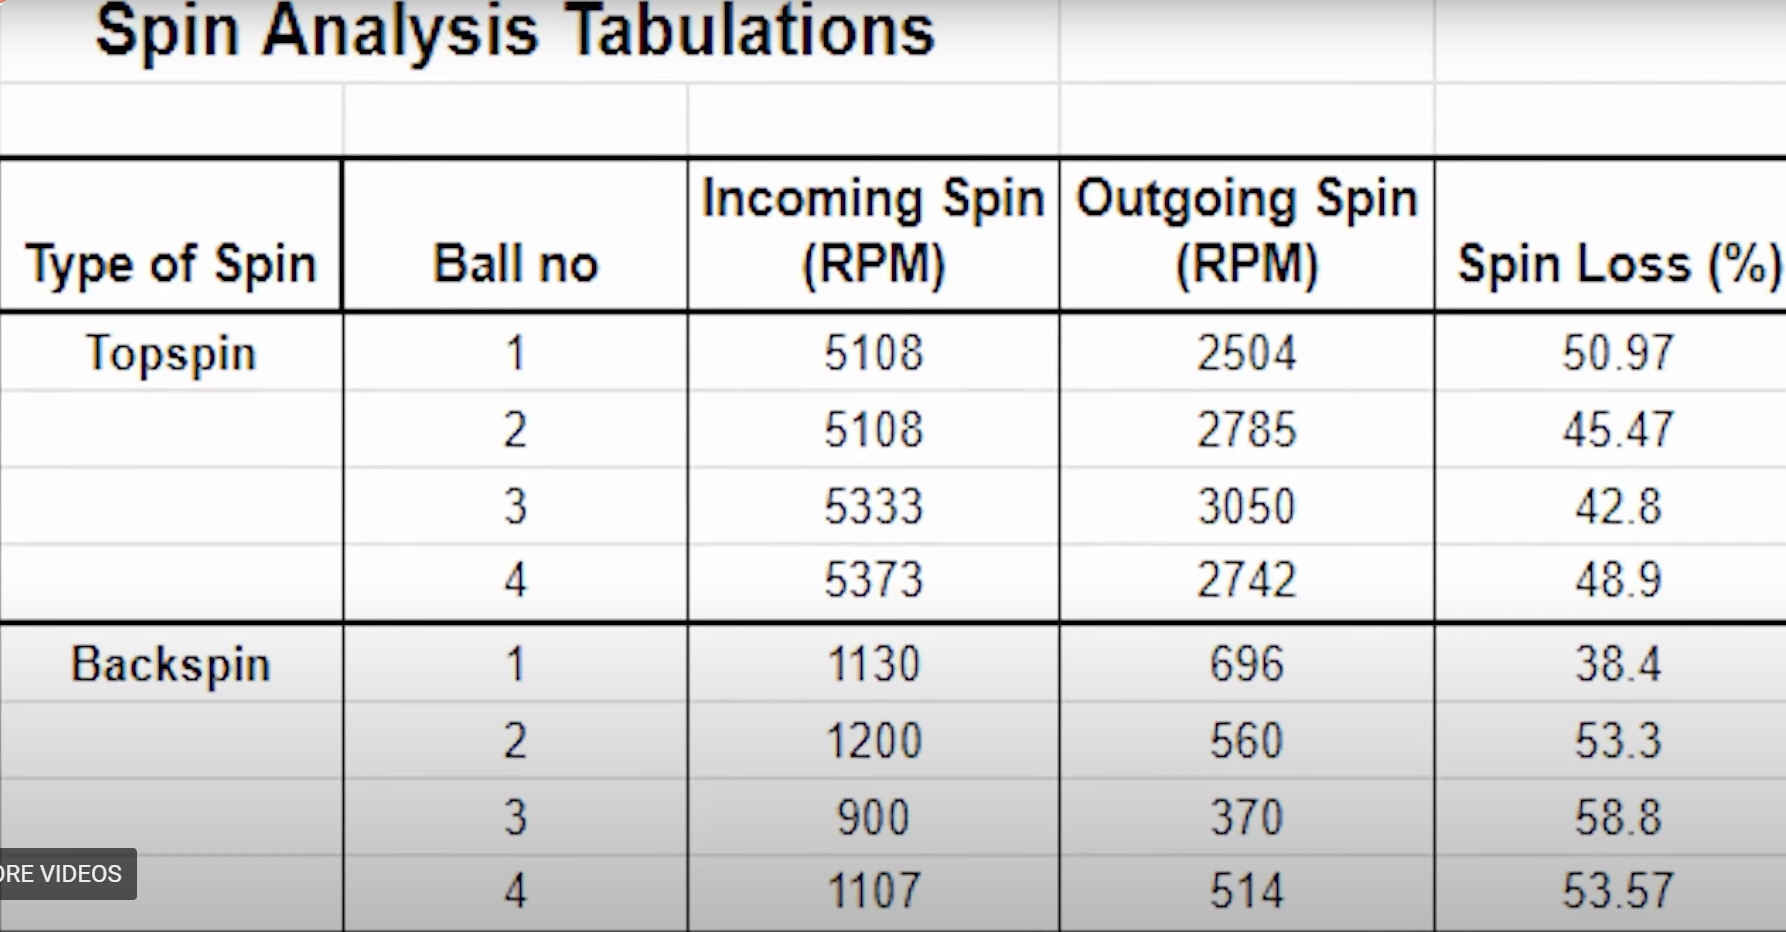 Palguay Spin analysis tabulation.jpg